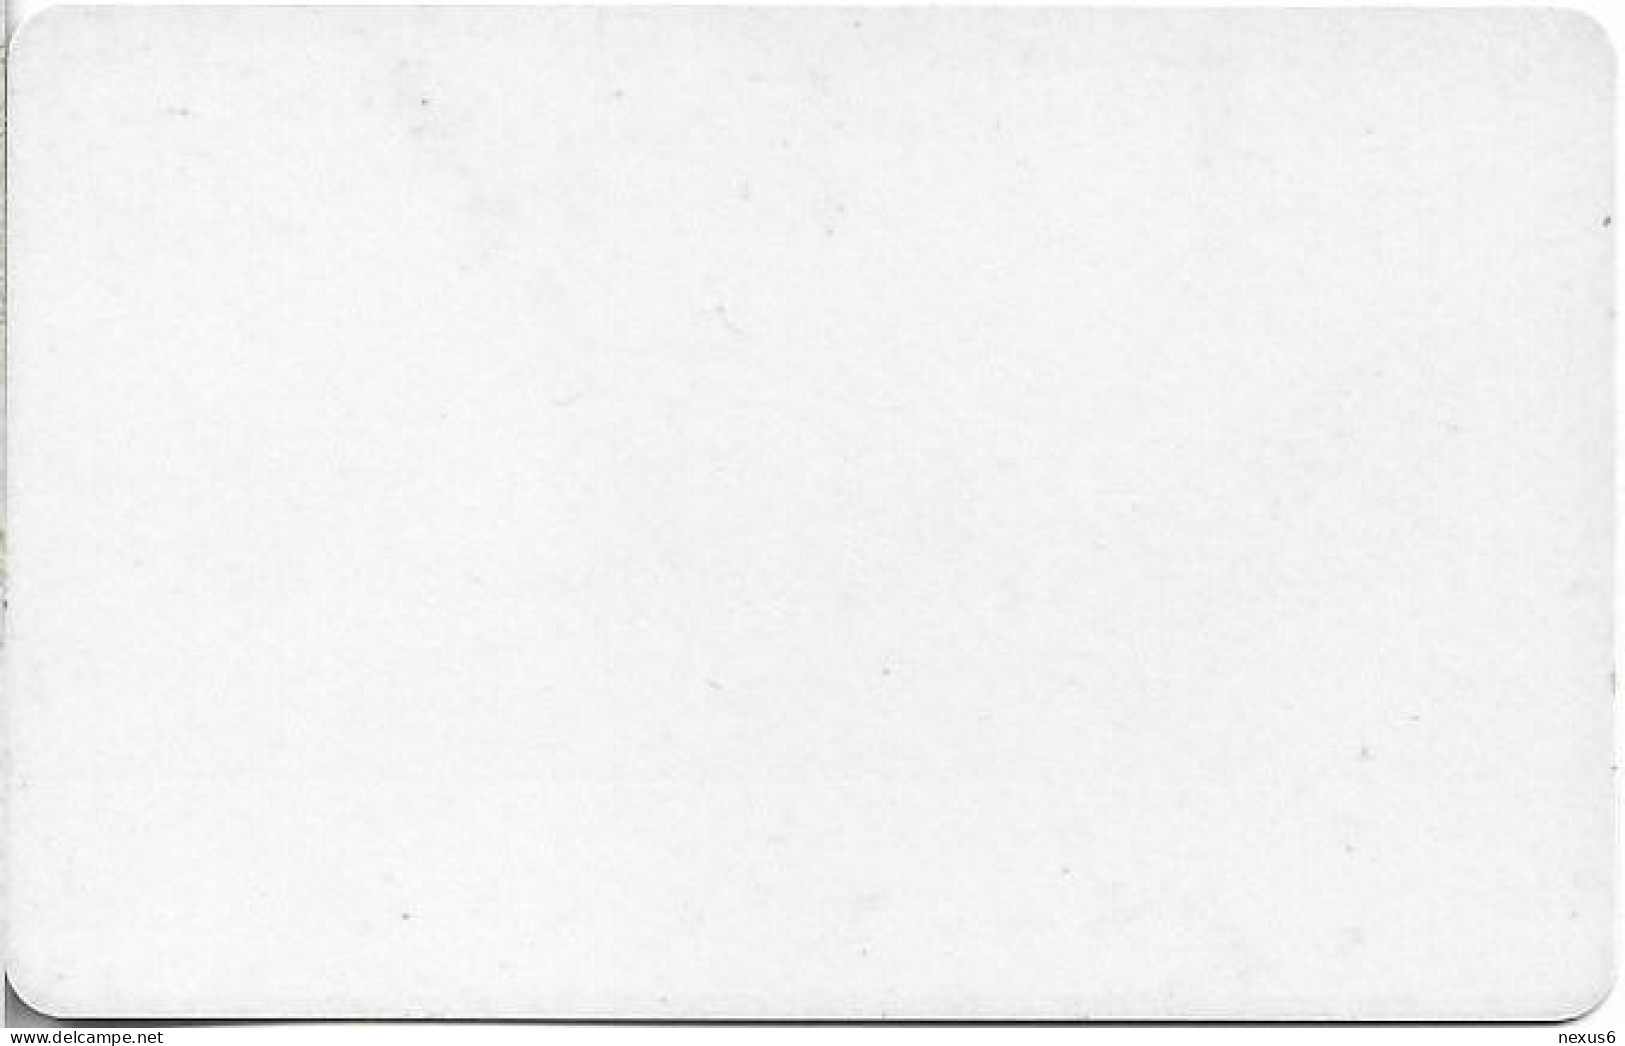 Ireland - Telecom Éireann - Autelca - Trial Card 1989, 10Units, 35.500ex, Used - Irlande